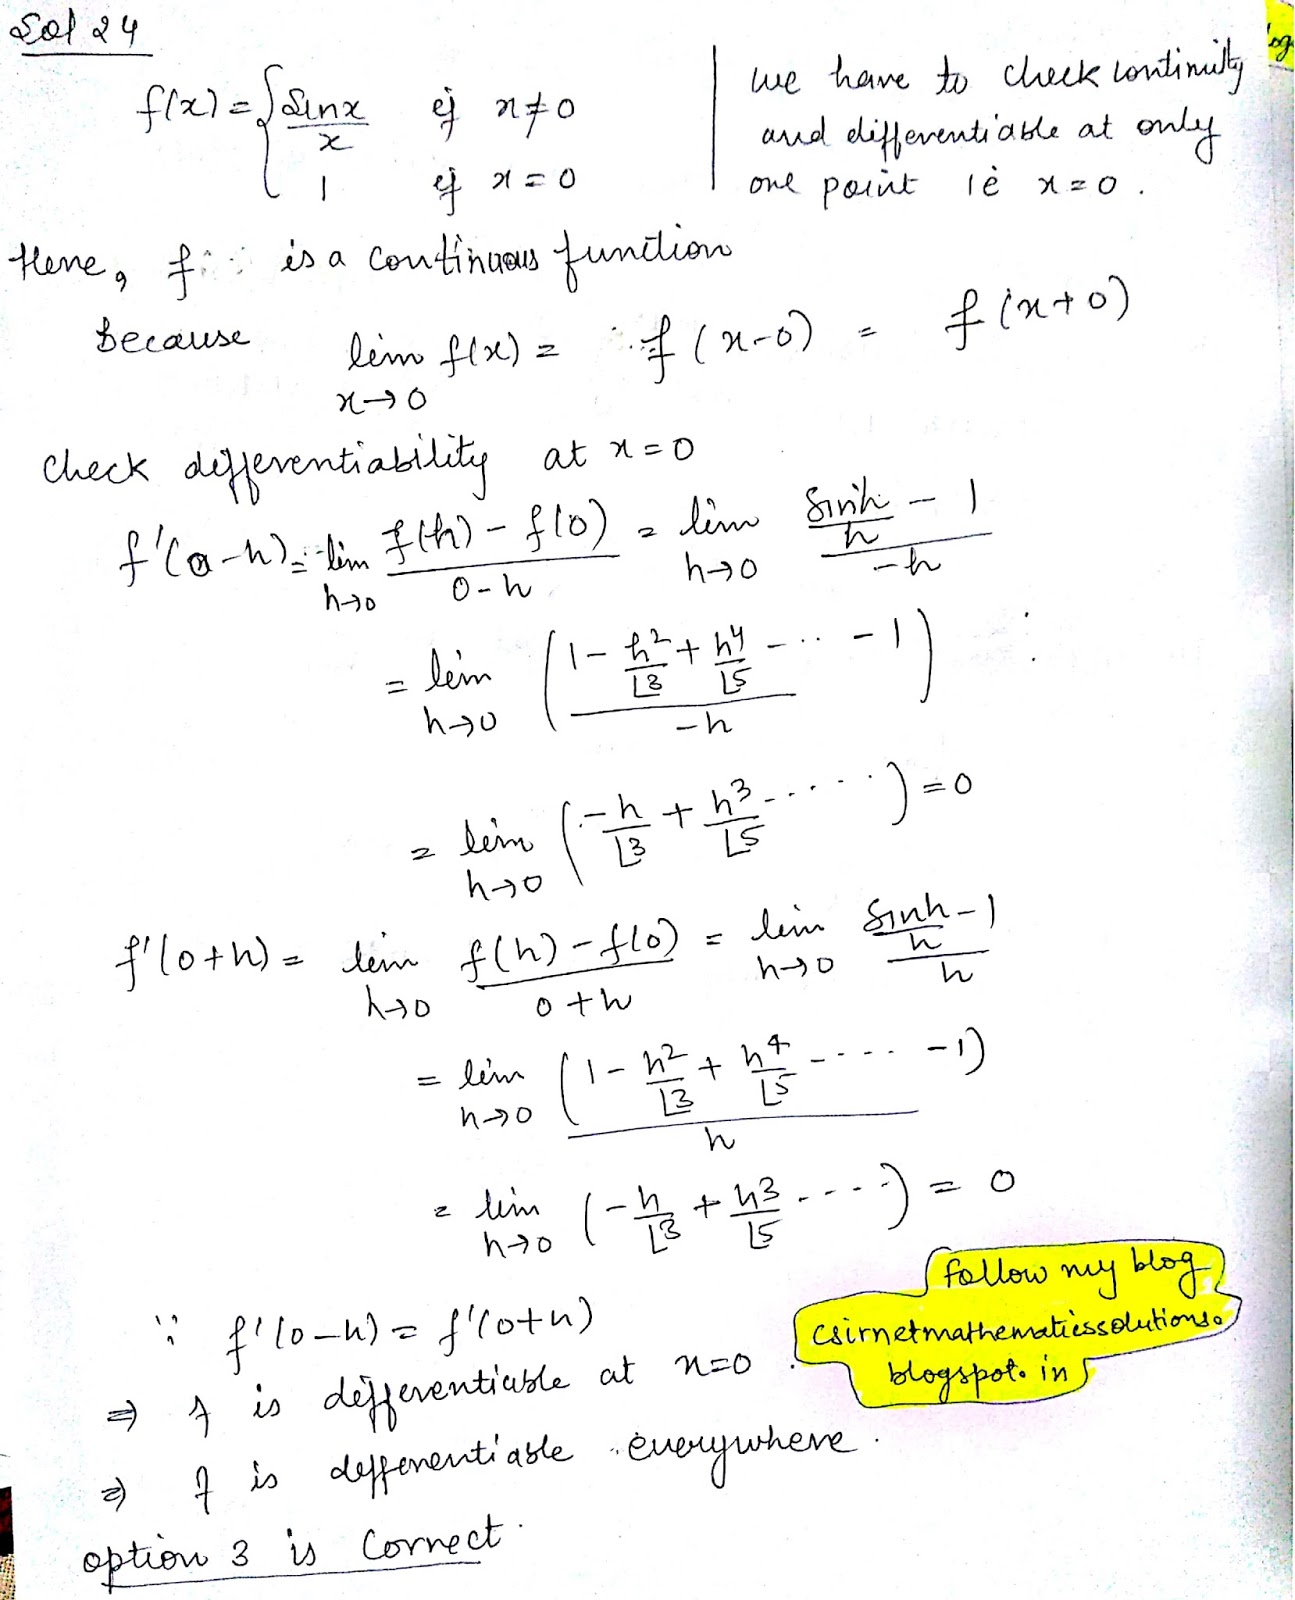 Csir net mathematics solved papers pdf